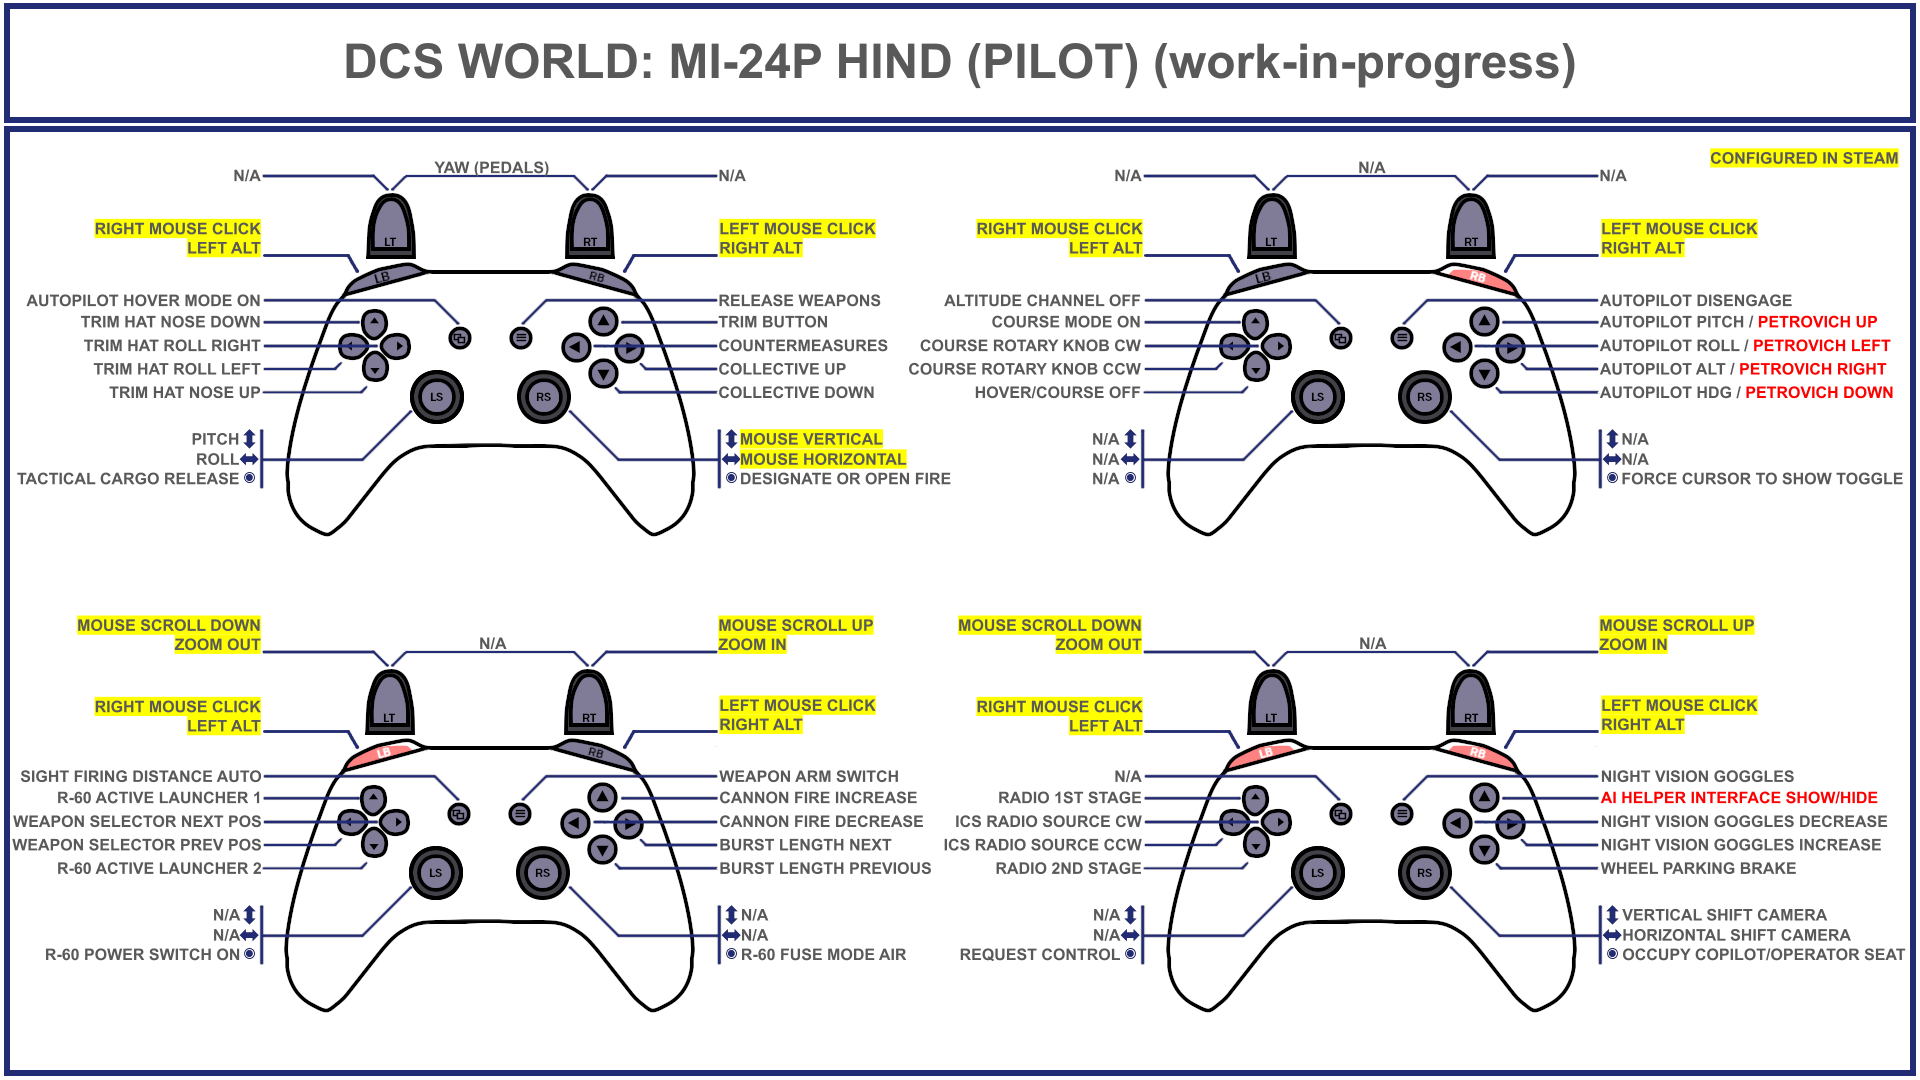 Tuuvas' Official Mi-24P Hind (Pilot + Petrovich) (work-in-progress) Gamepad Controller Layout